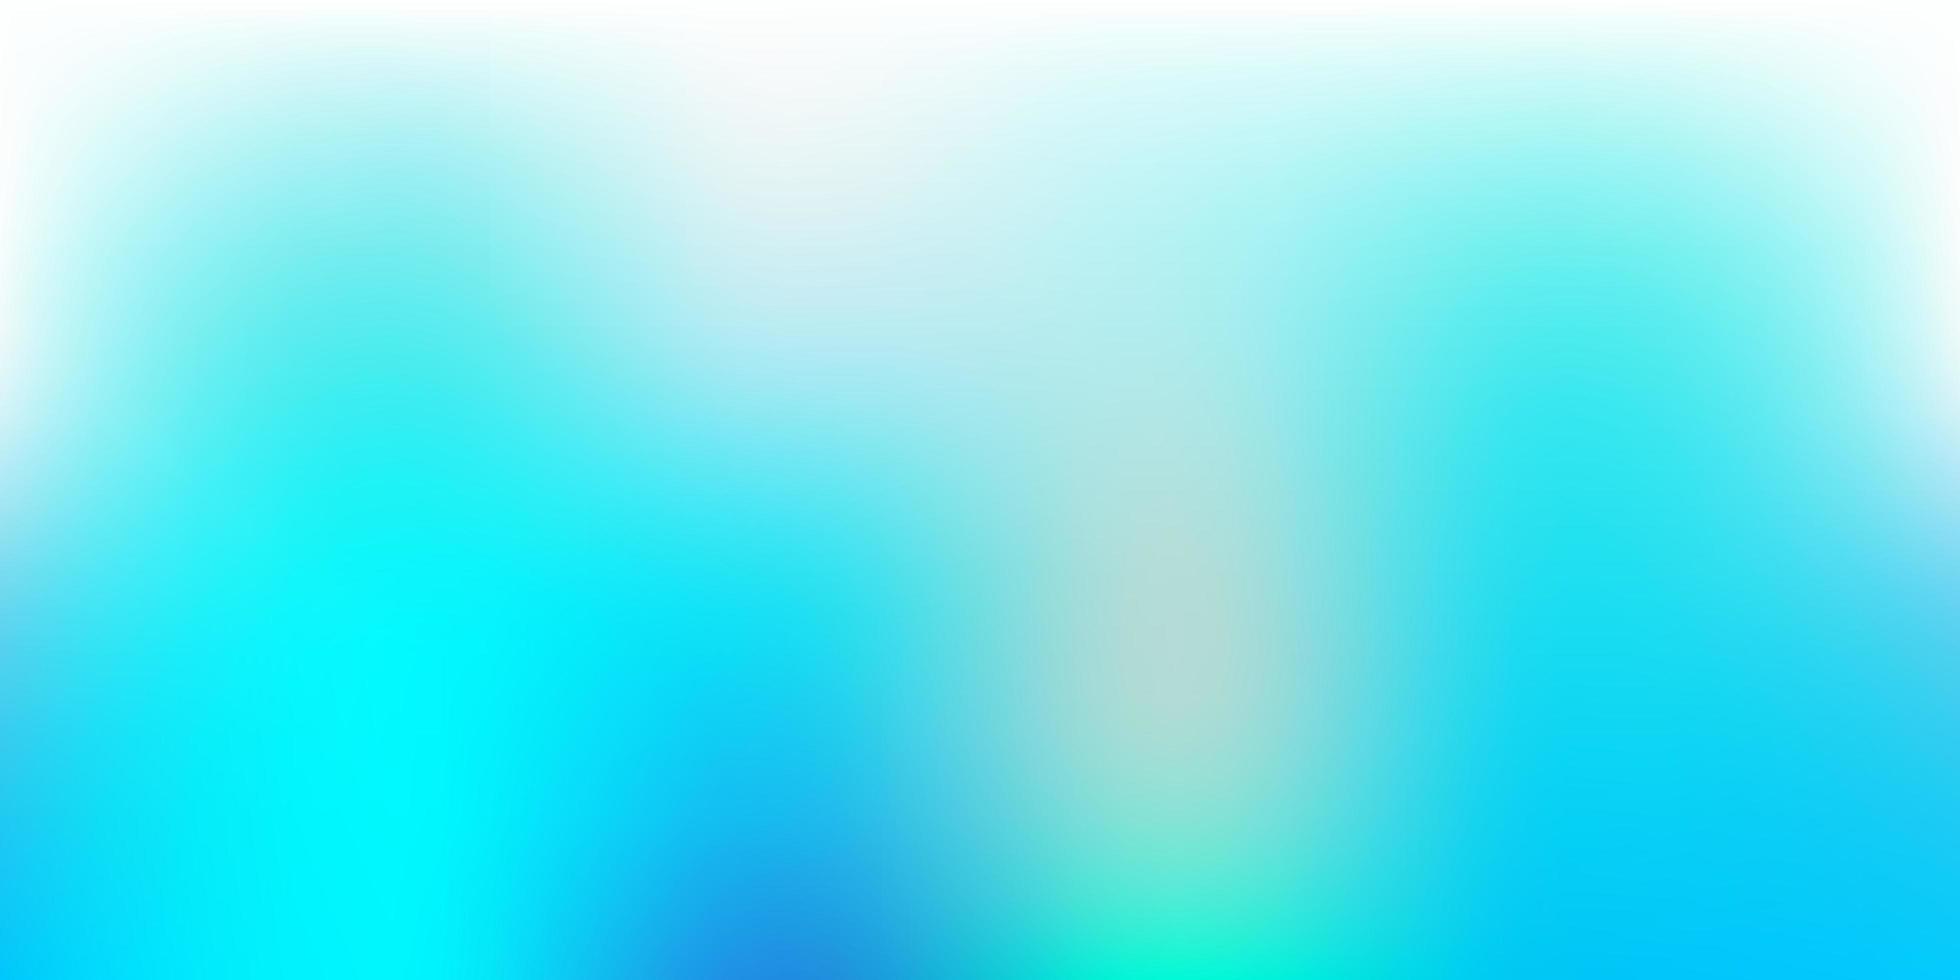 layout di sfocatura vettoriale azzurro, verde.